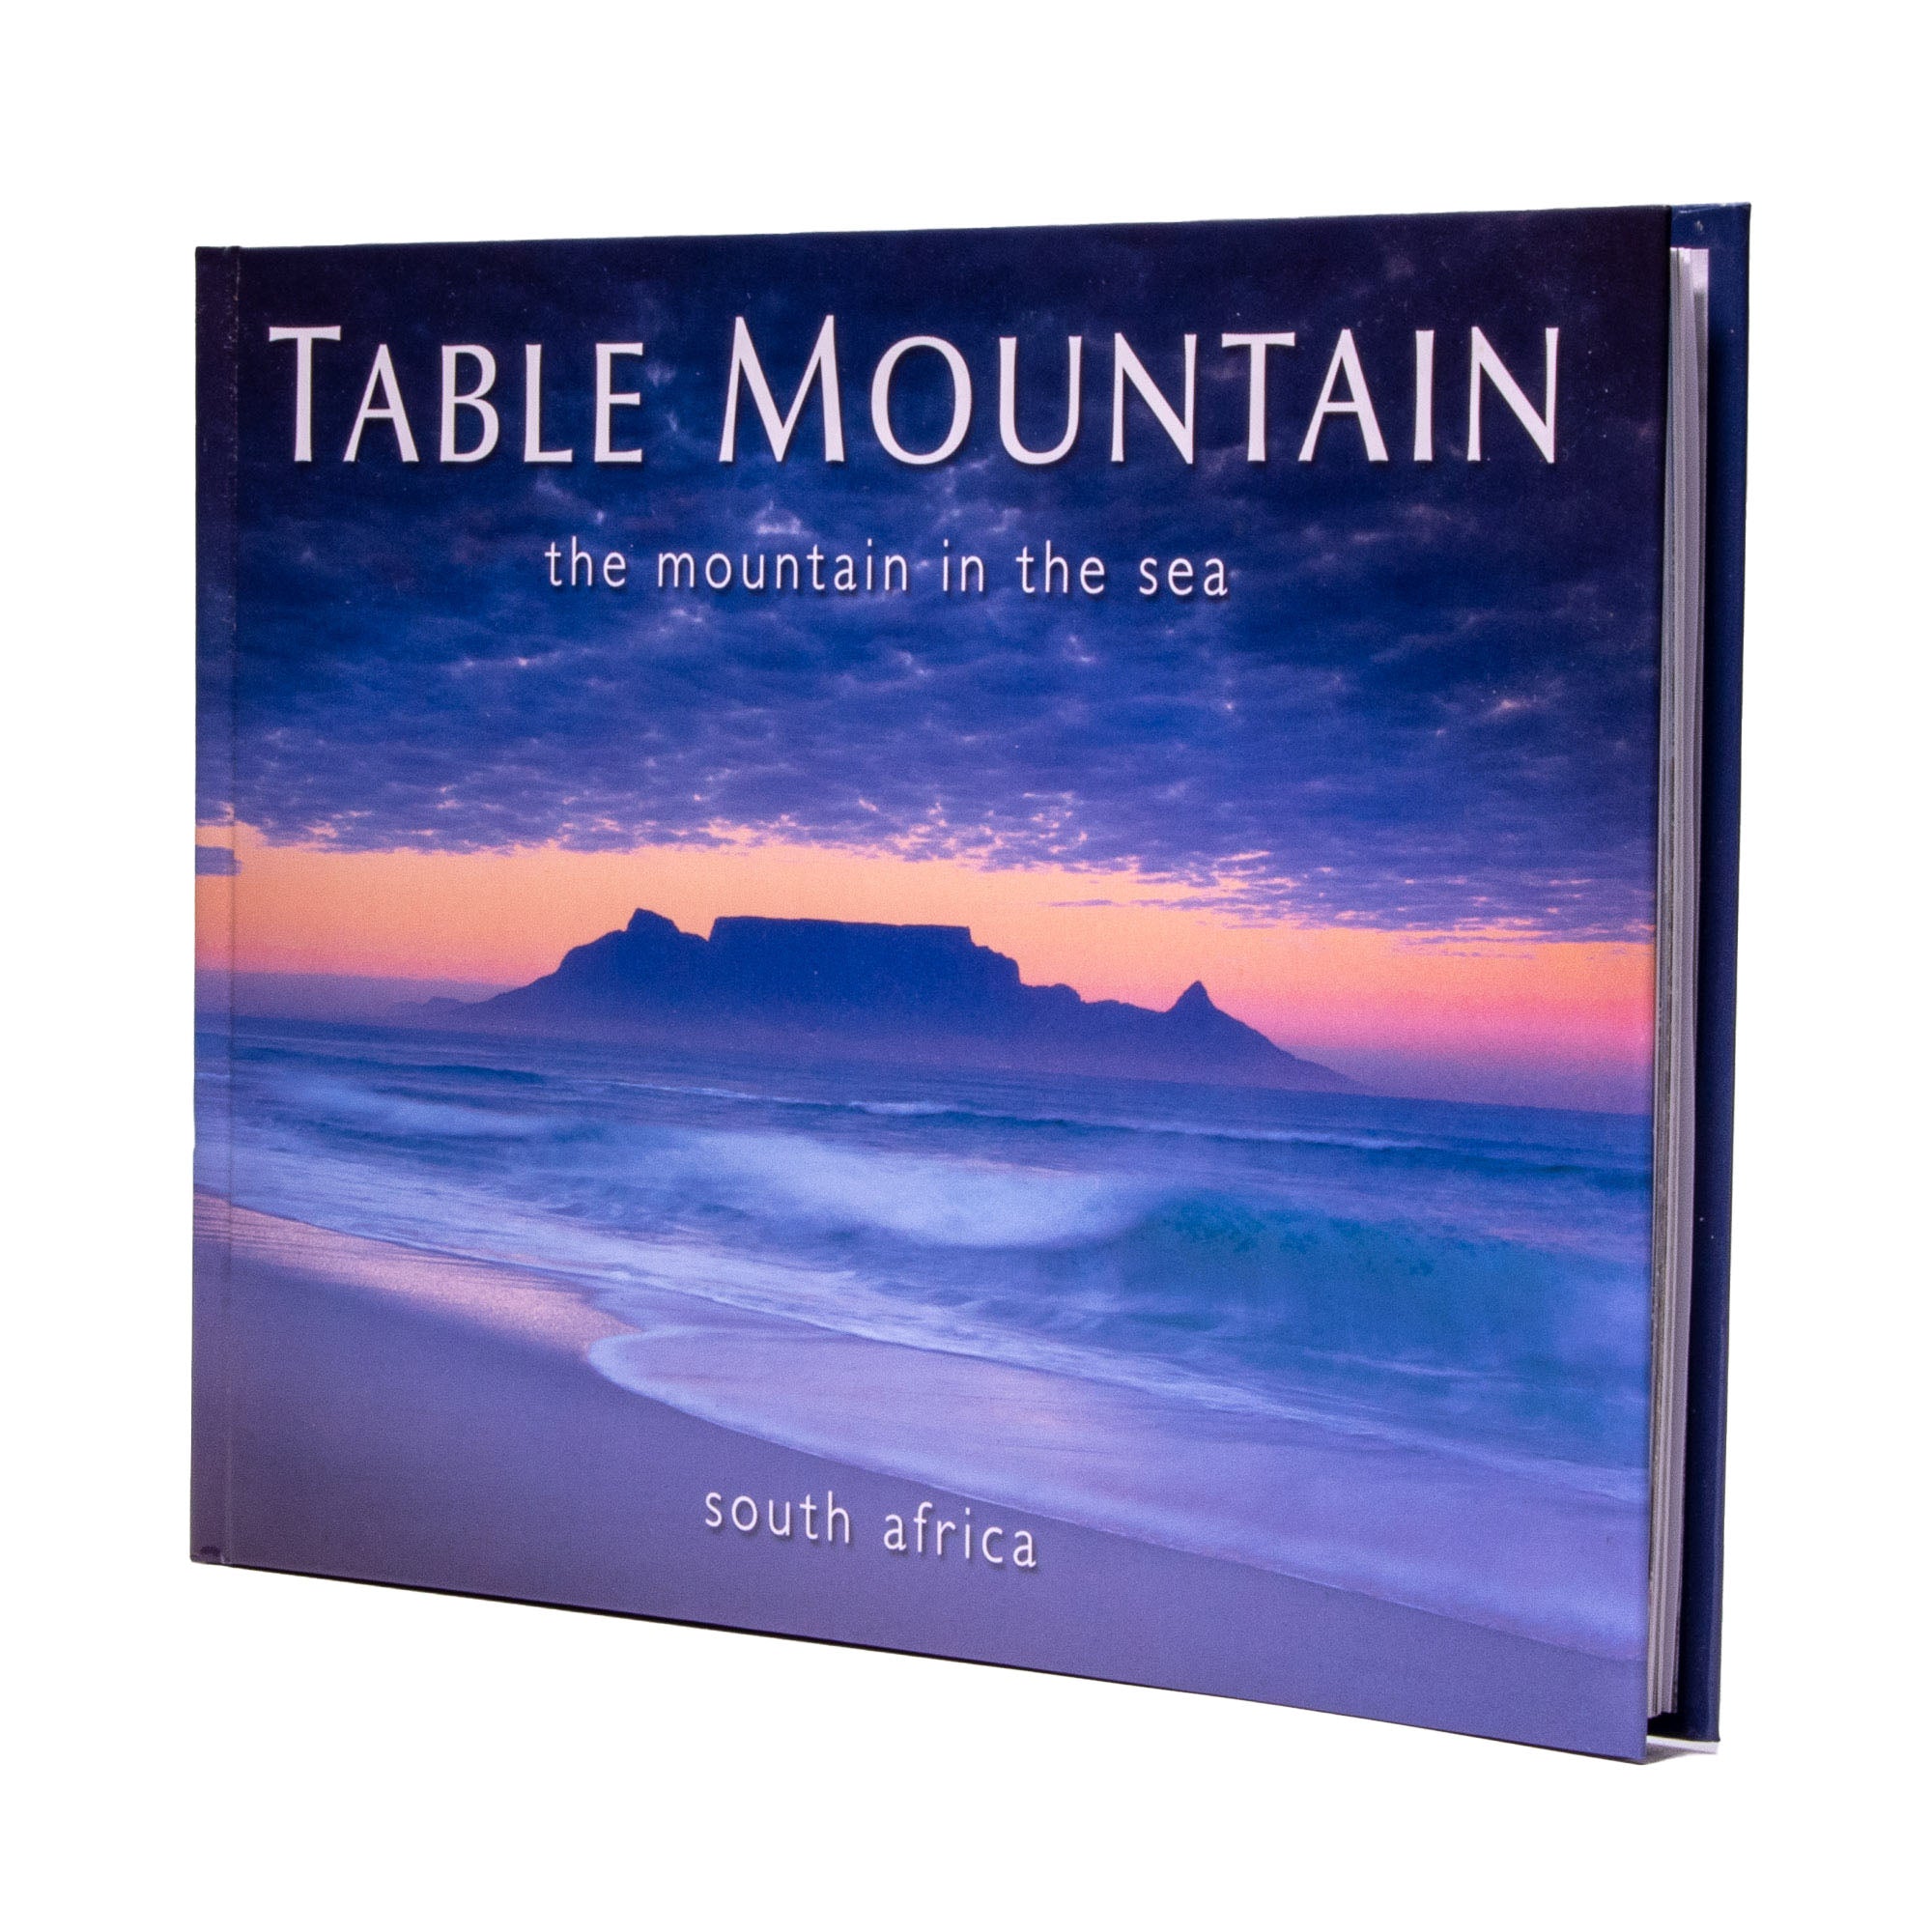 Table Mountain the mountain in the sea